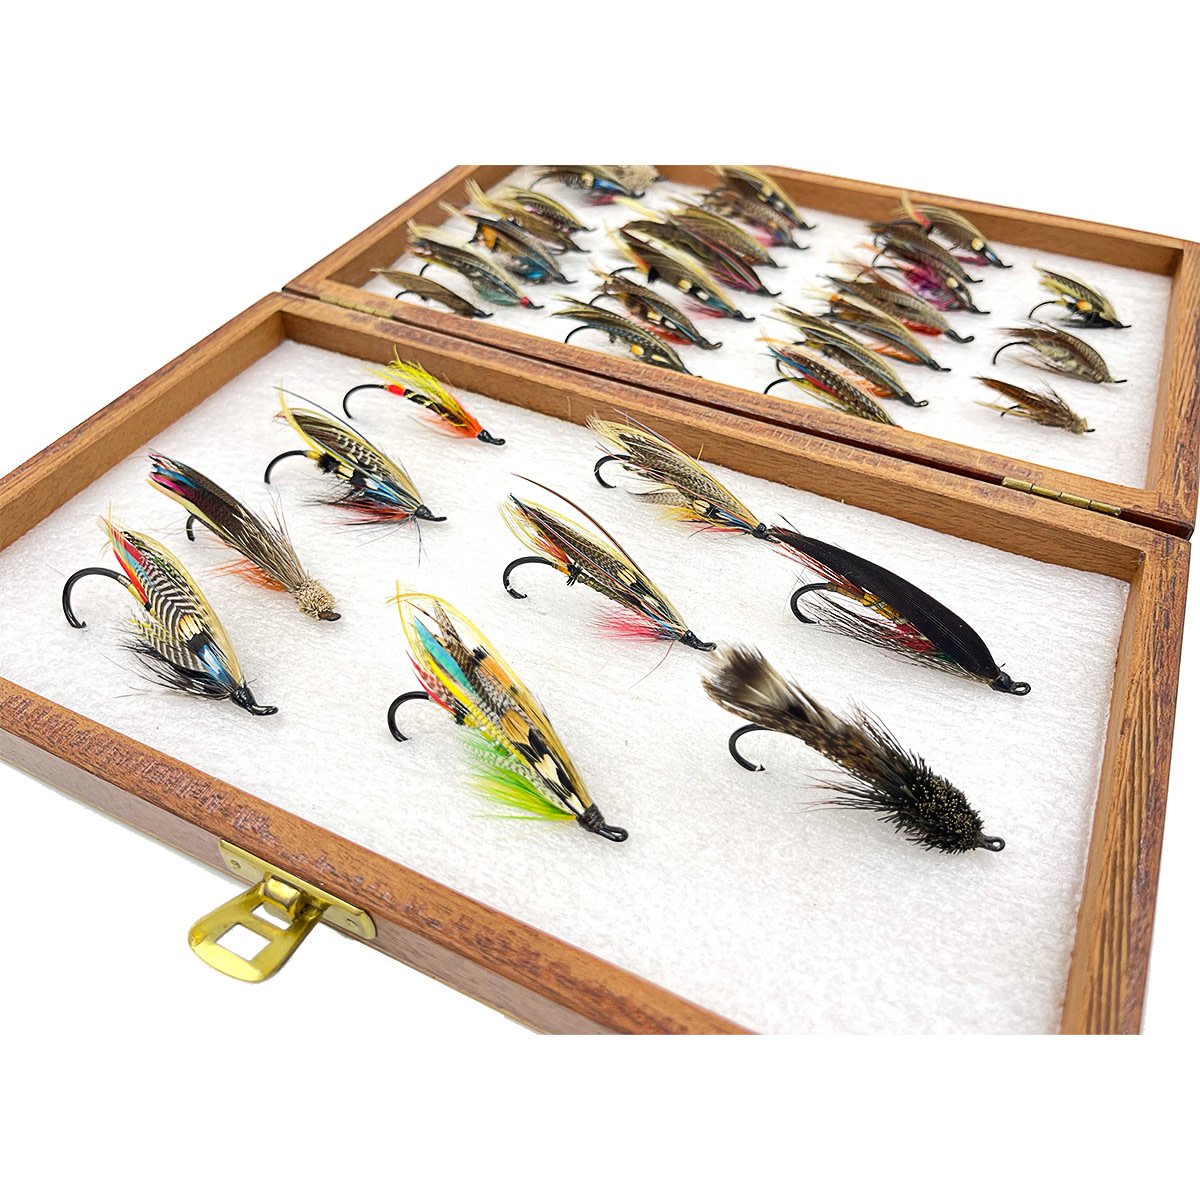 Tara Design Tara Design Wooden Fly Box with 33 Classic Atlantic Salmon Flies